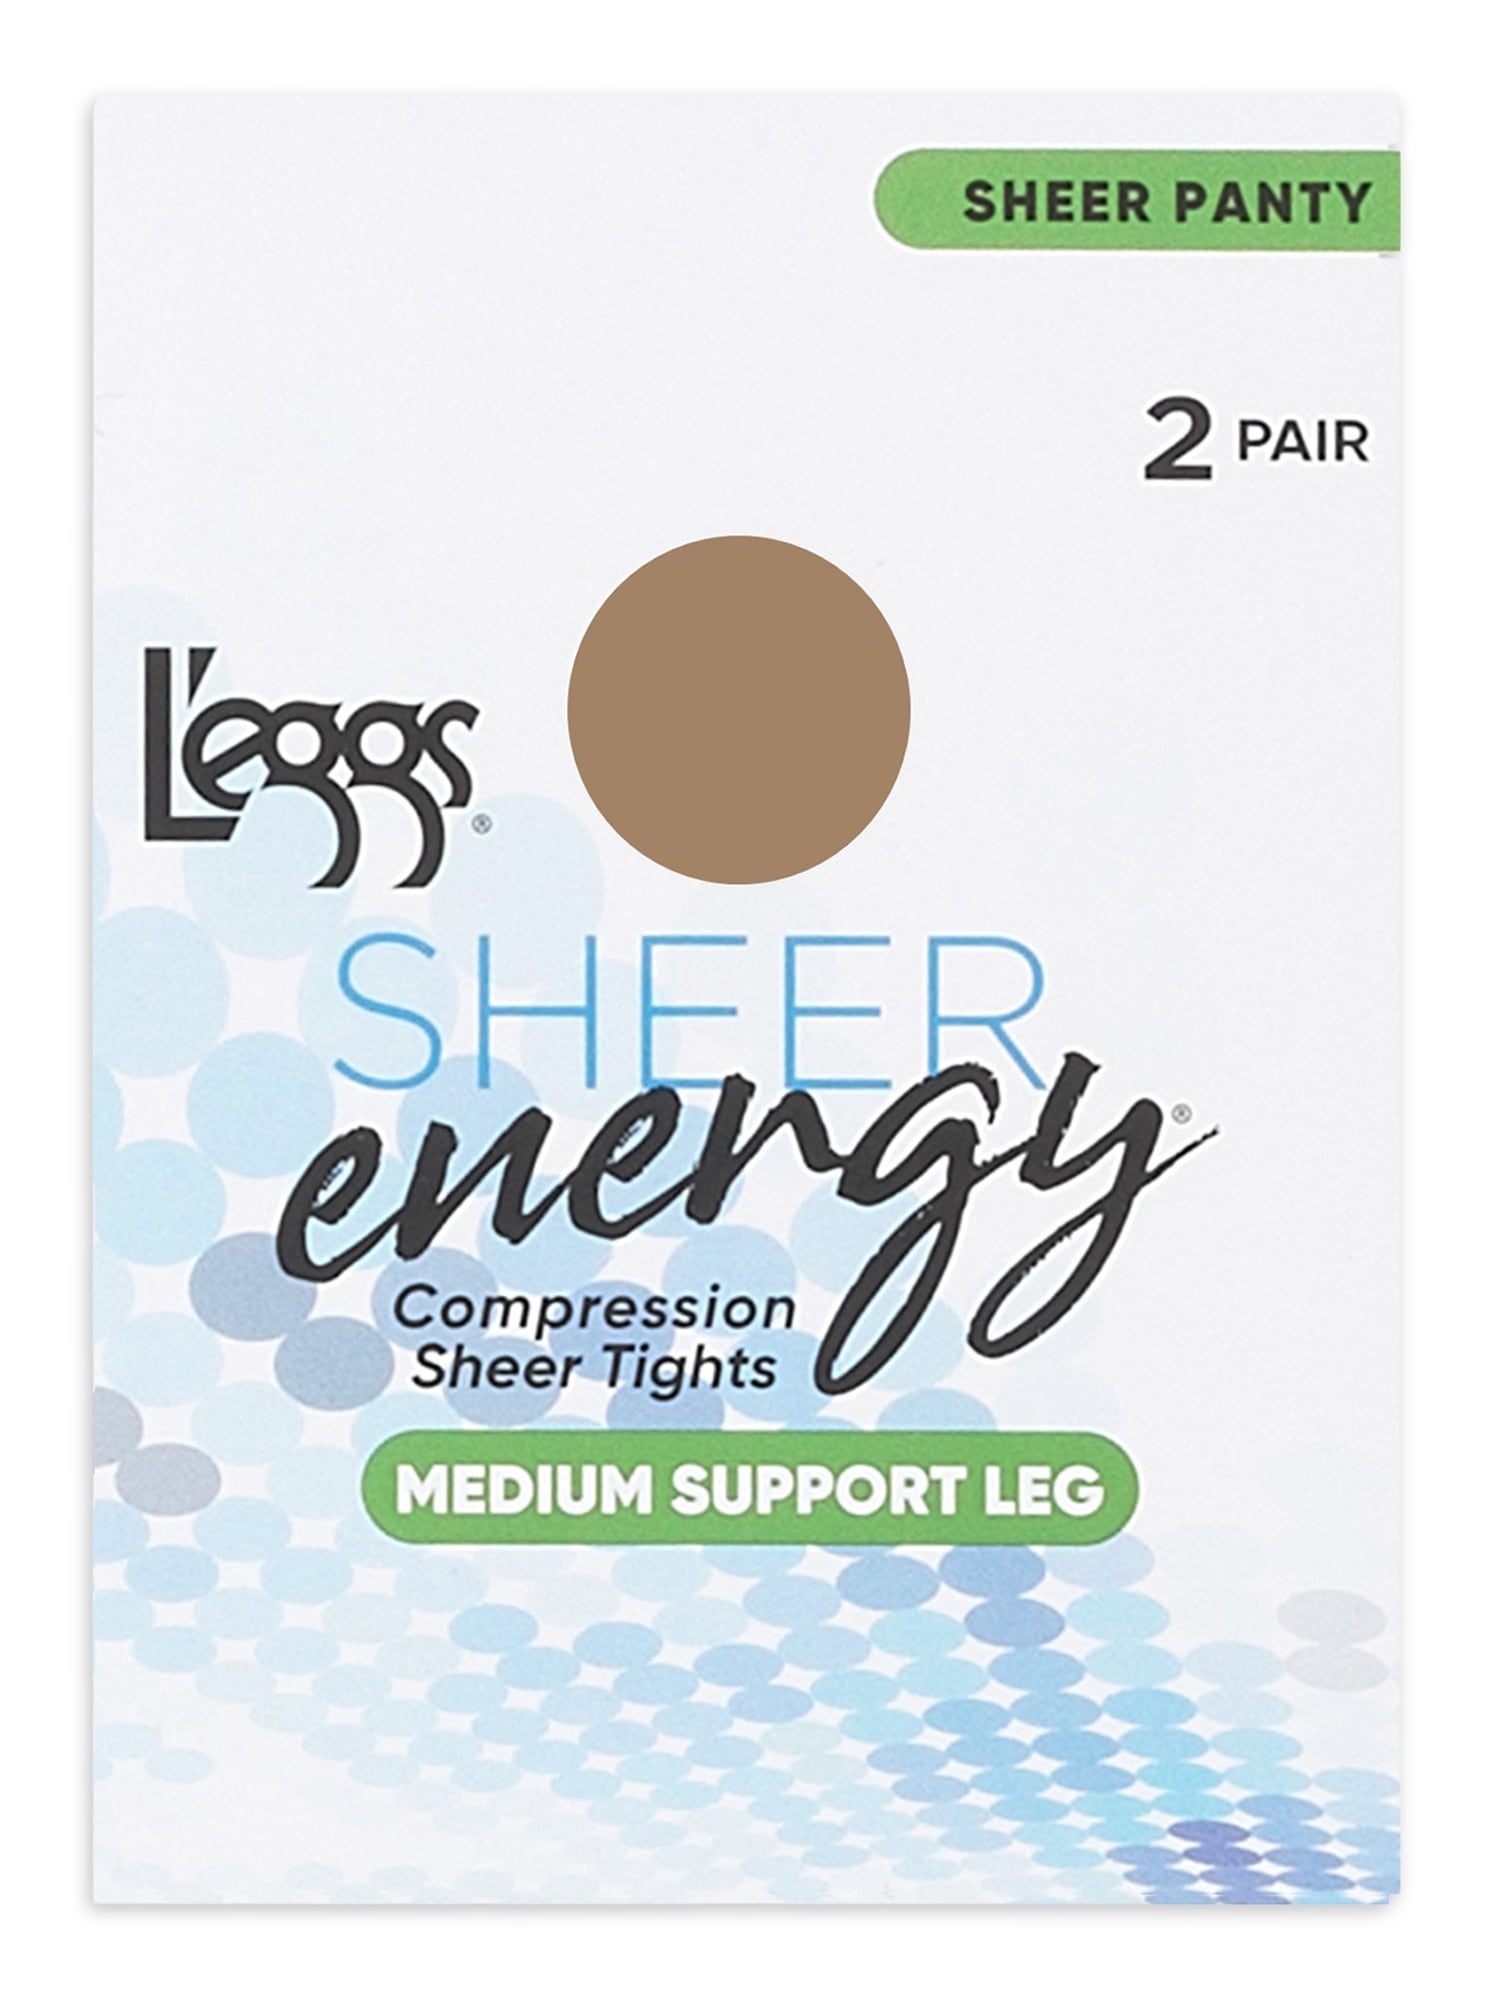 L'eggs Sheer Energy Medium Leg Support Sheer Panty Sheer Toe Tights, 2 Pair  